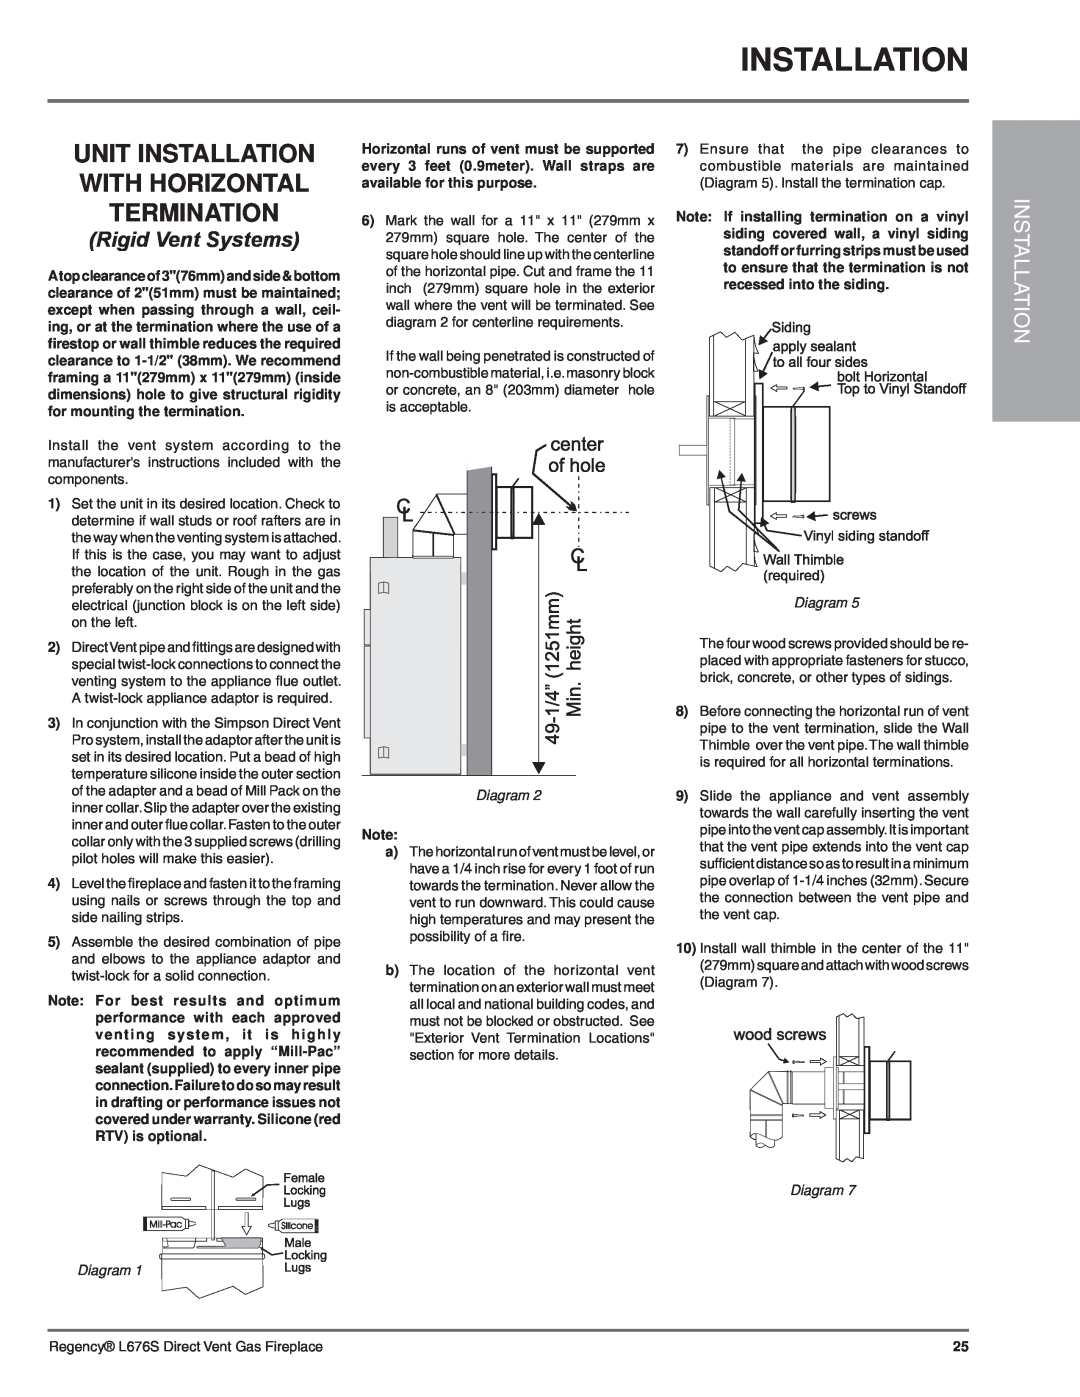 Regency L676S-NG1 Unit Installation With Horizontal Termination, Rigid Vent Systems, Diagram Diagram 